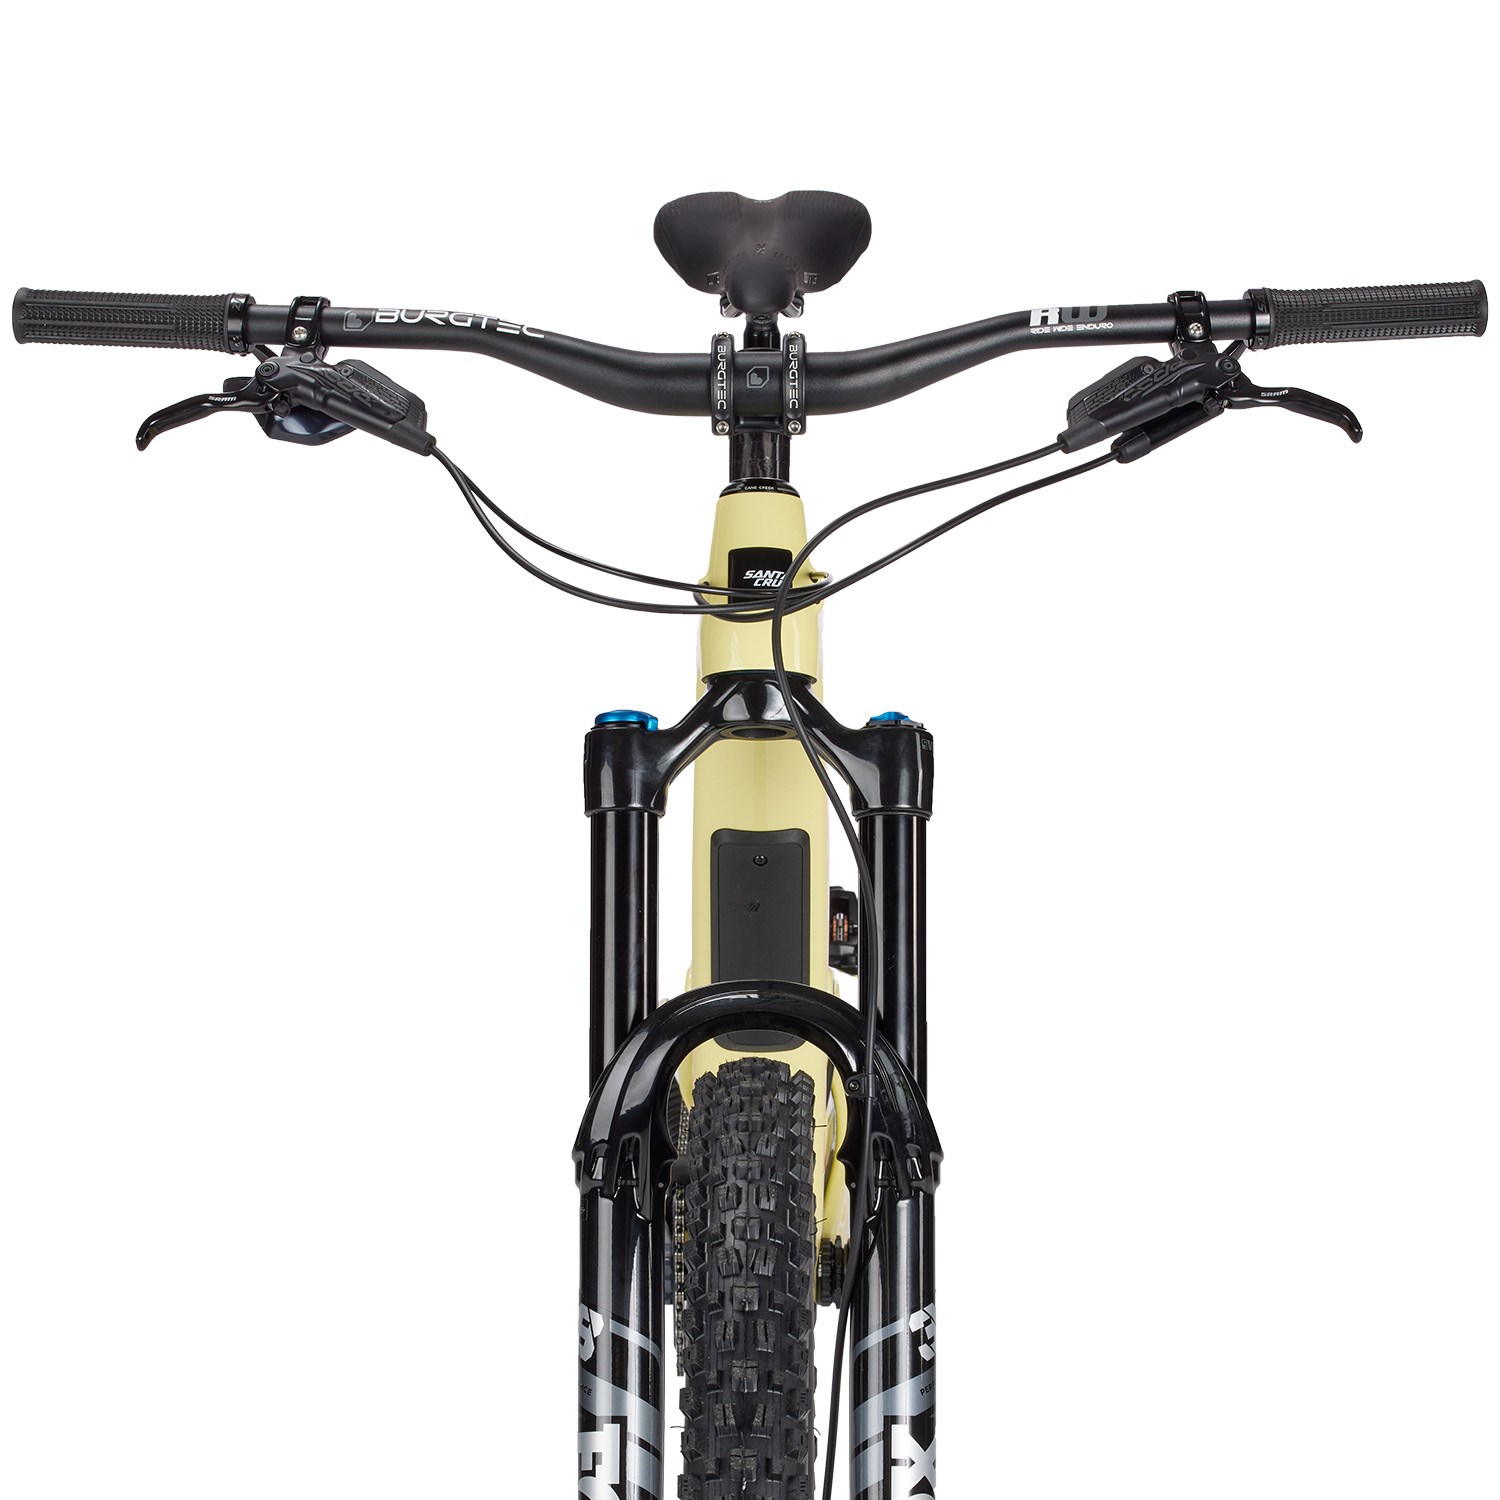 Allmountainstyle.com - Tevor's Santa Cruz Bicycles Nomad V4 with